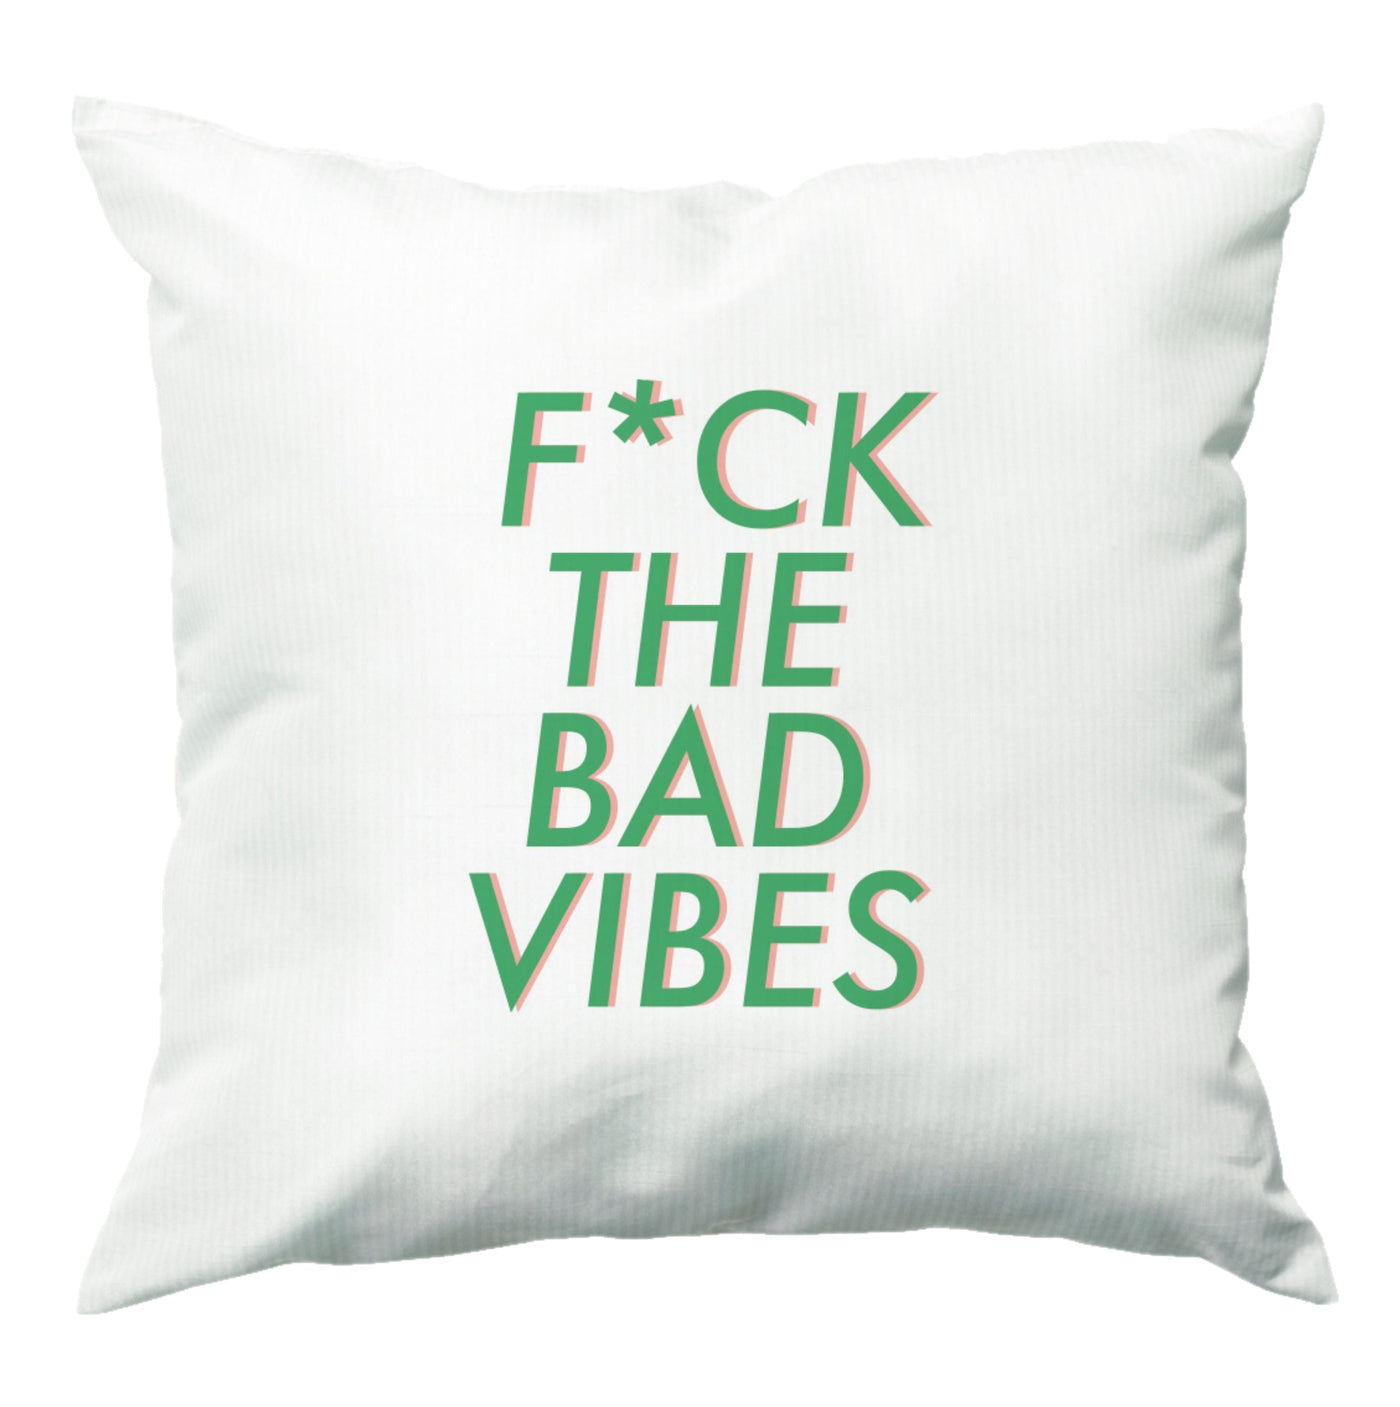 The Bad Vibes - Sassy Quotes Cushion